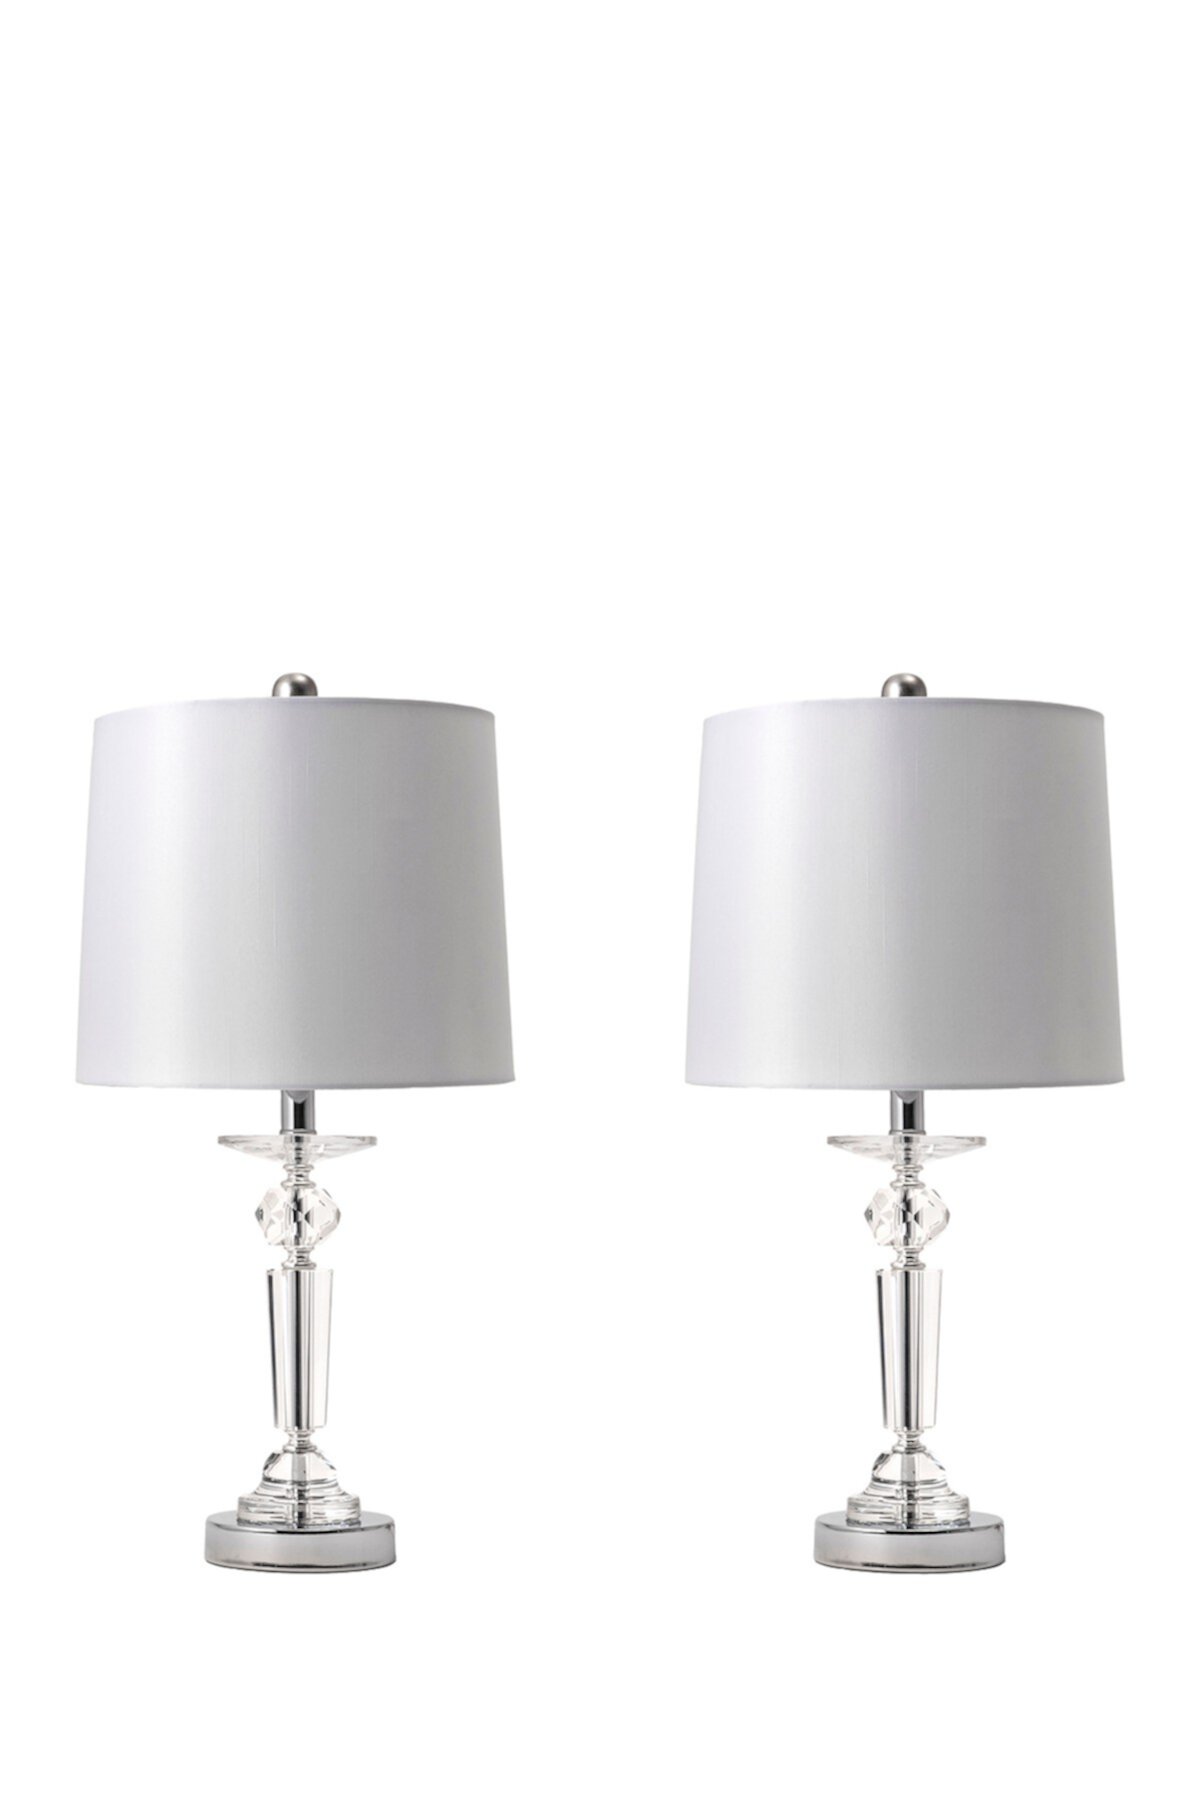 Danni Crystal 23" Table Lamp - Set of 2 NuLOOM